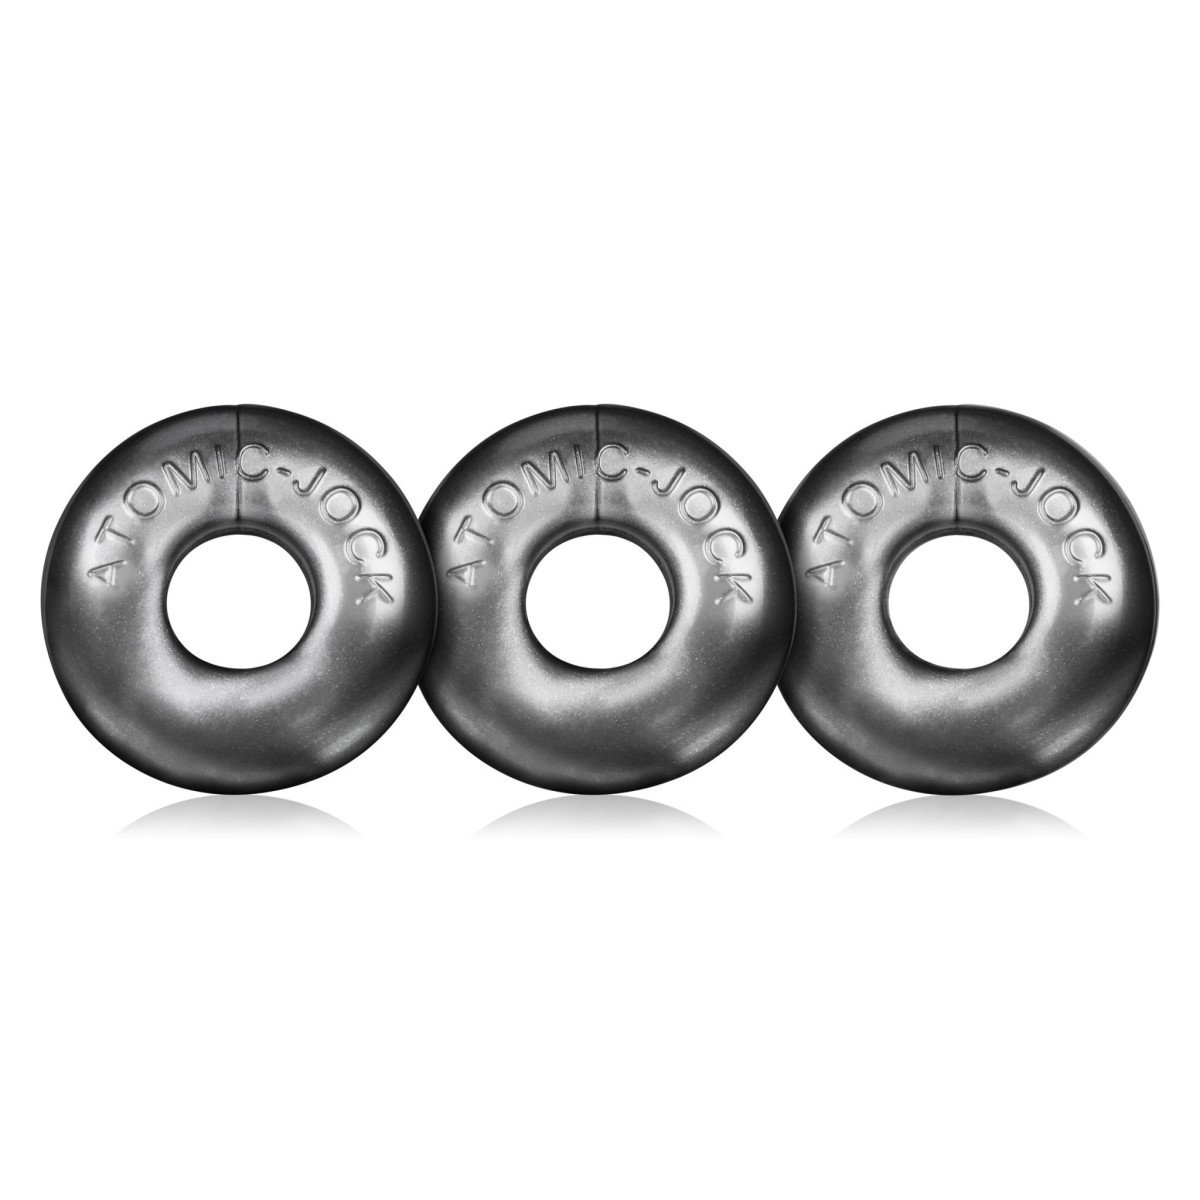 Oxballs Ringer Cock Rings 3-Pack Silver Steel